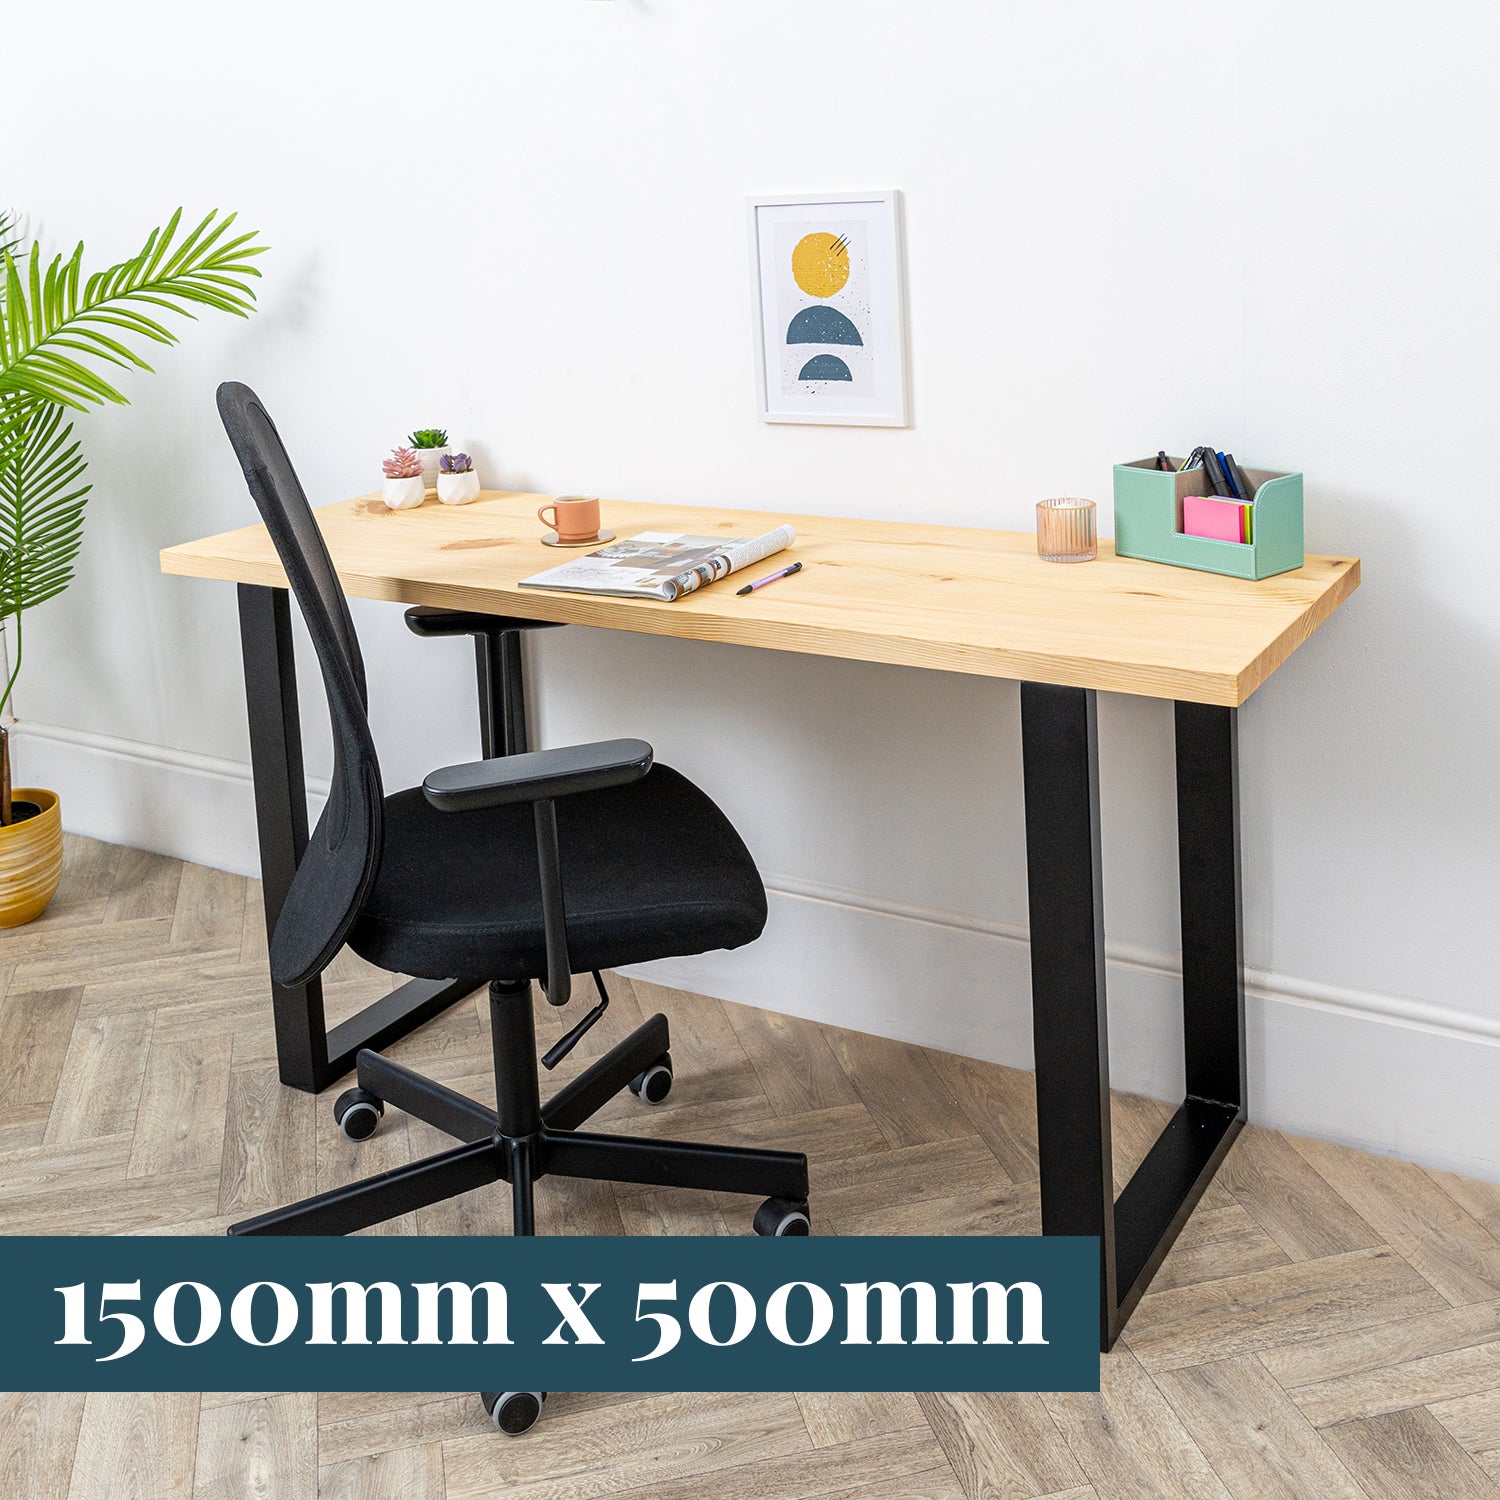 Reclaimed Wooden Desks with Industrial Metal Legs #length_1500mm depth_500mm